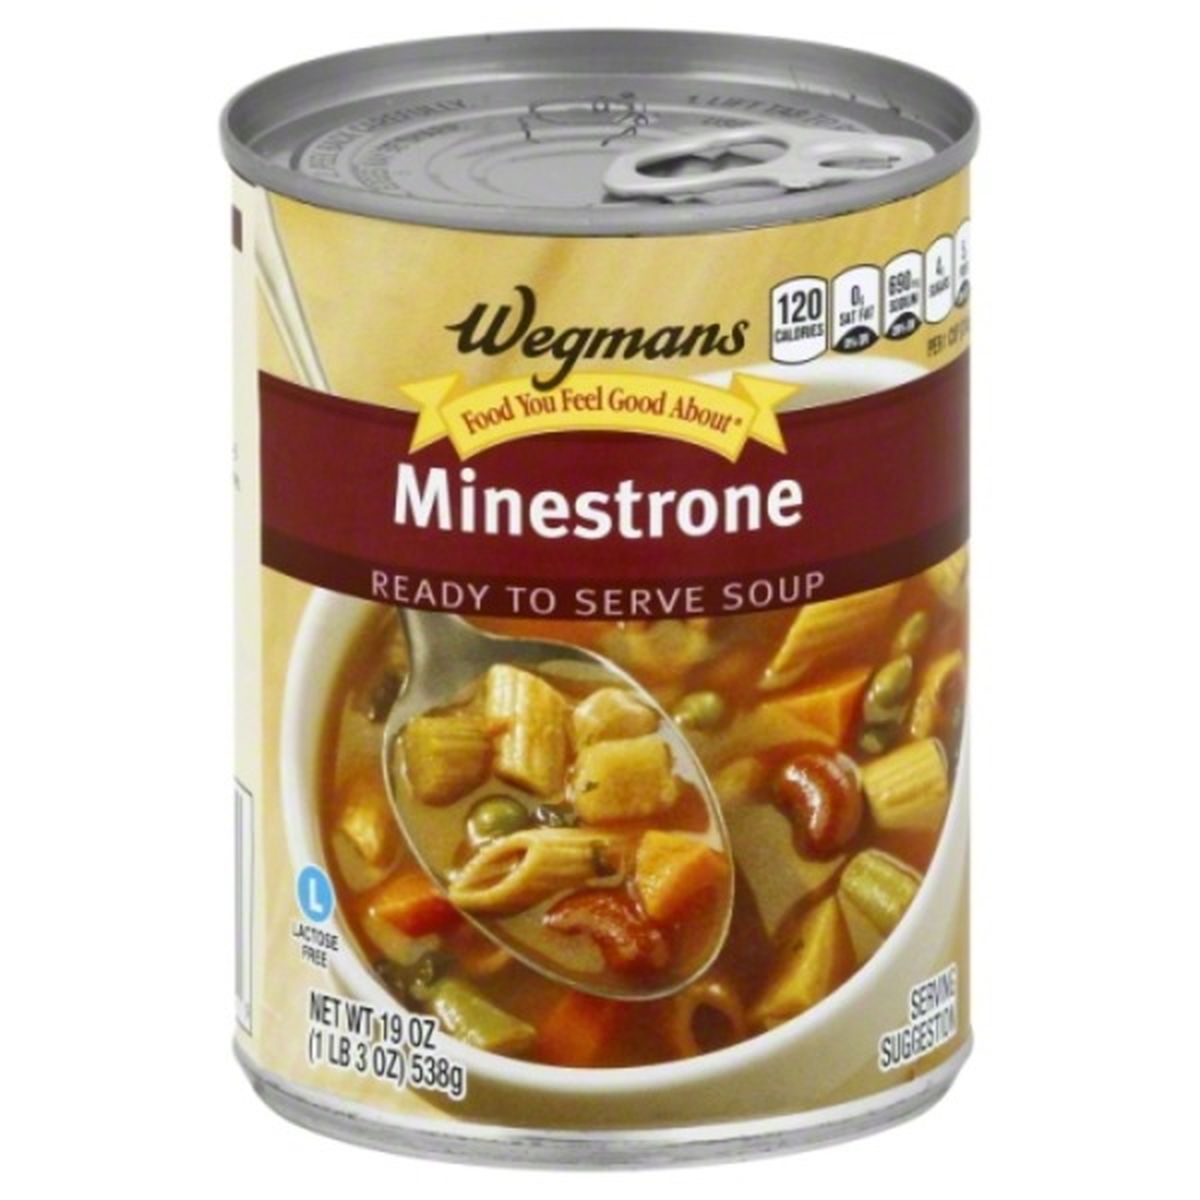 Calories in Wegmans Minestrone Soup